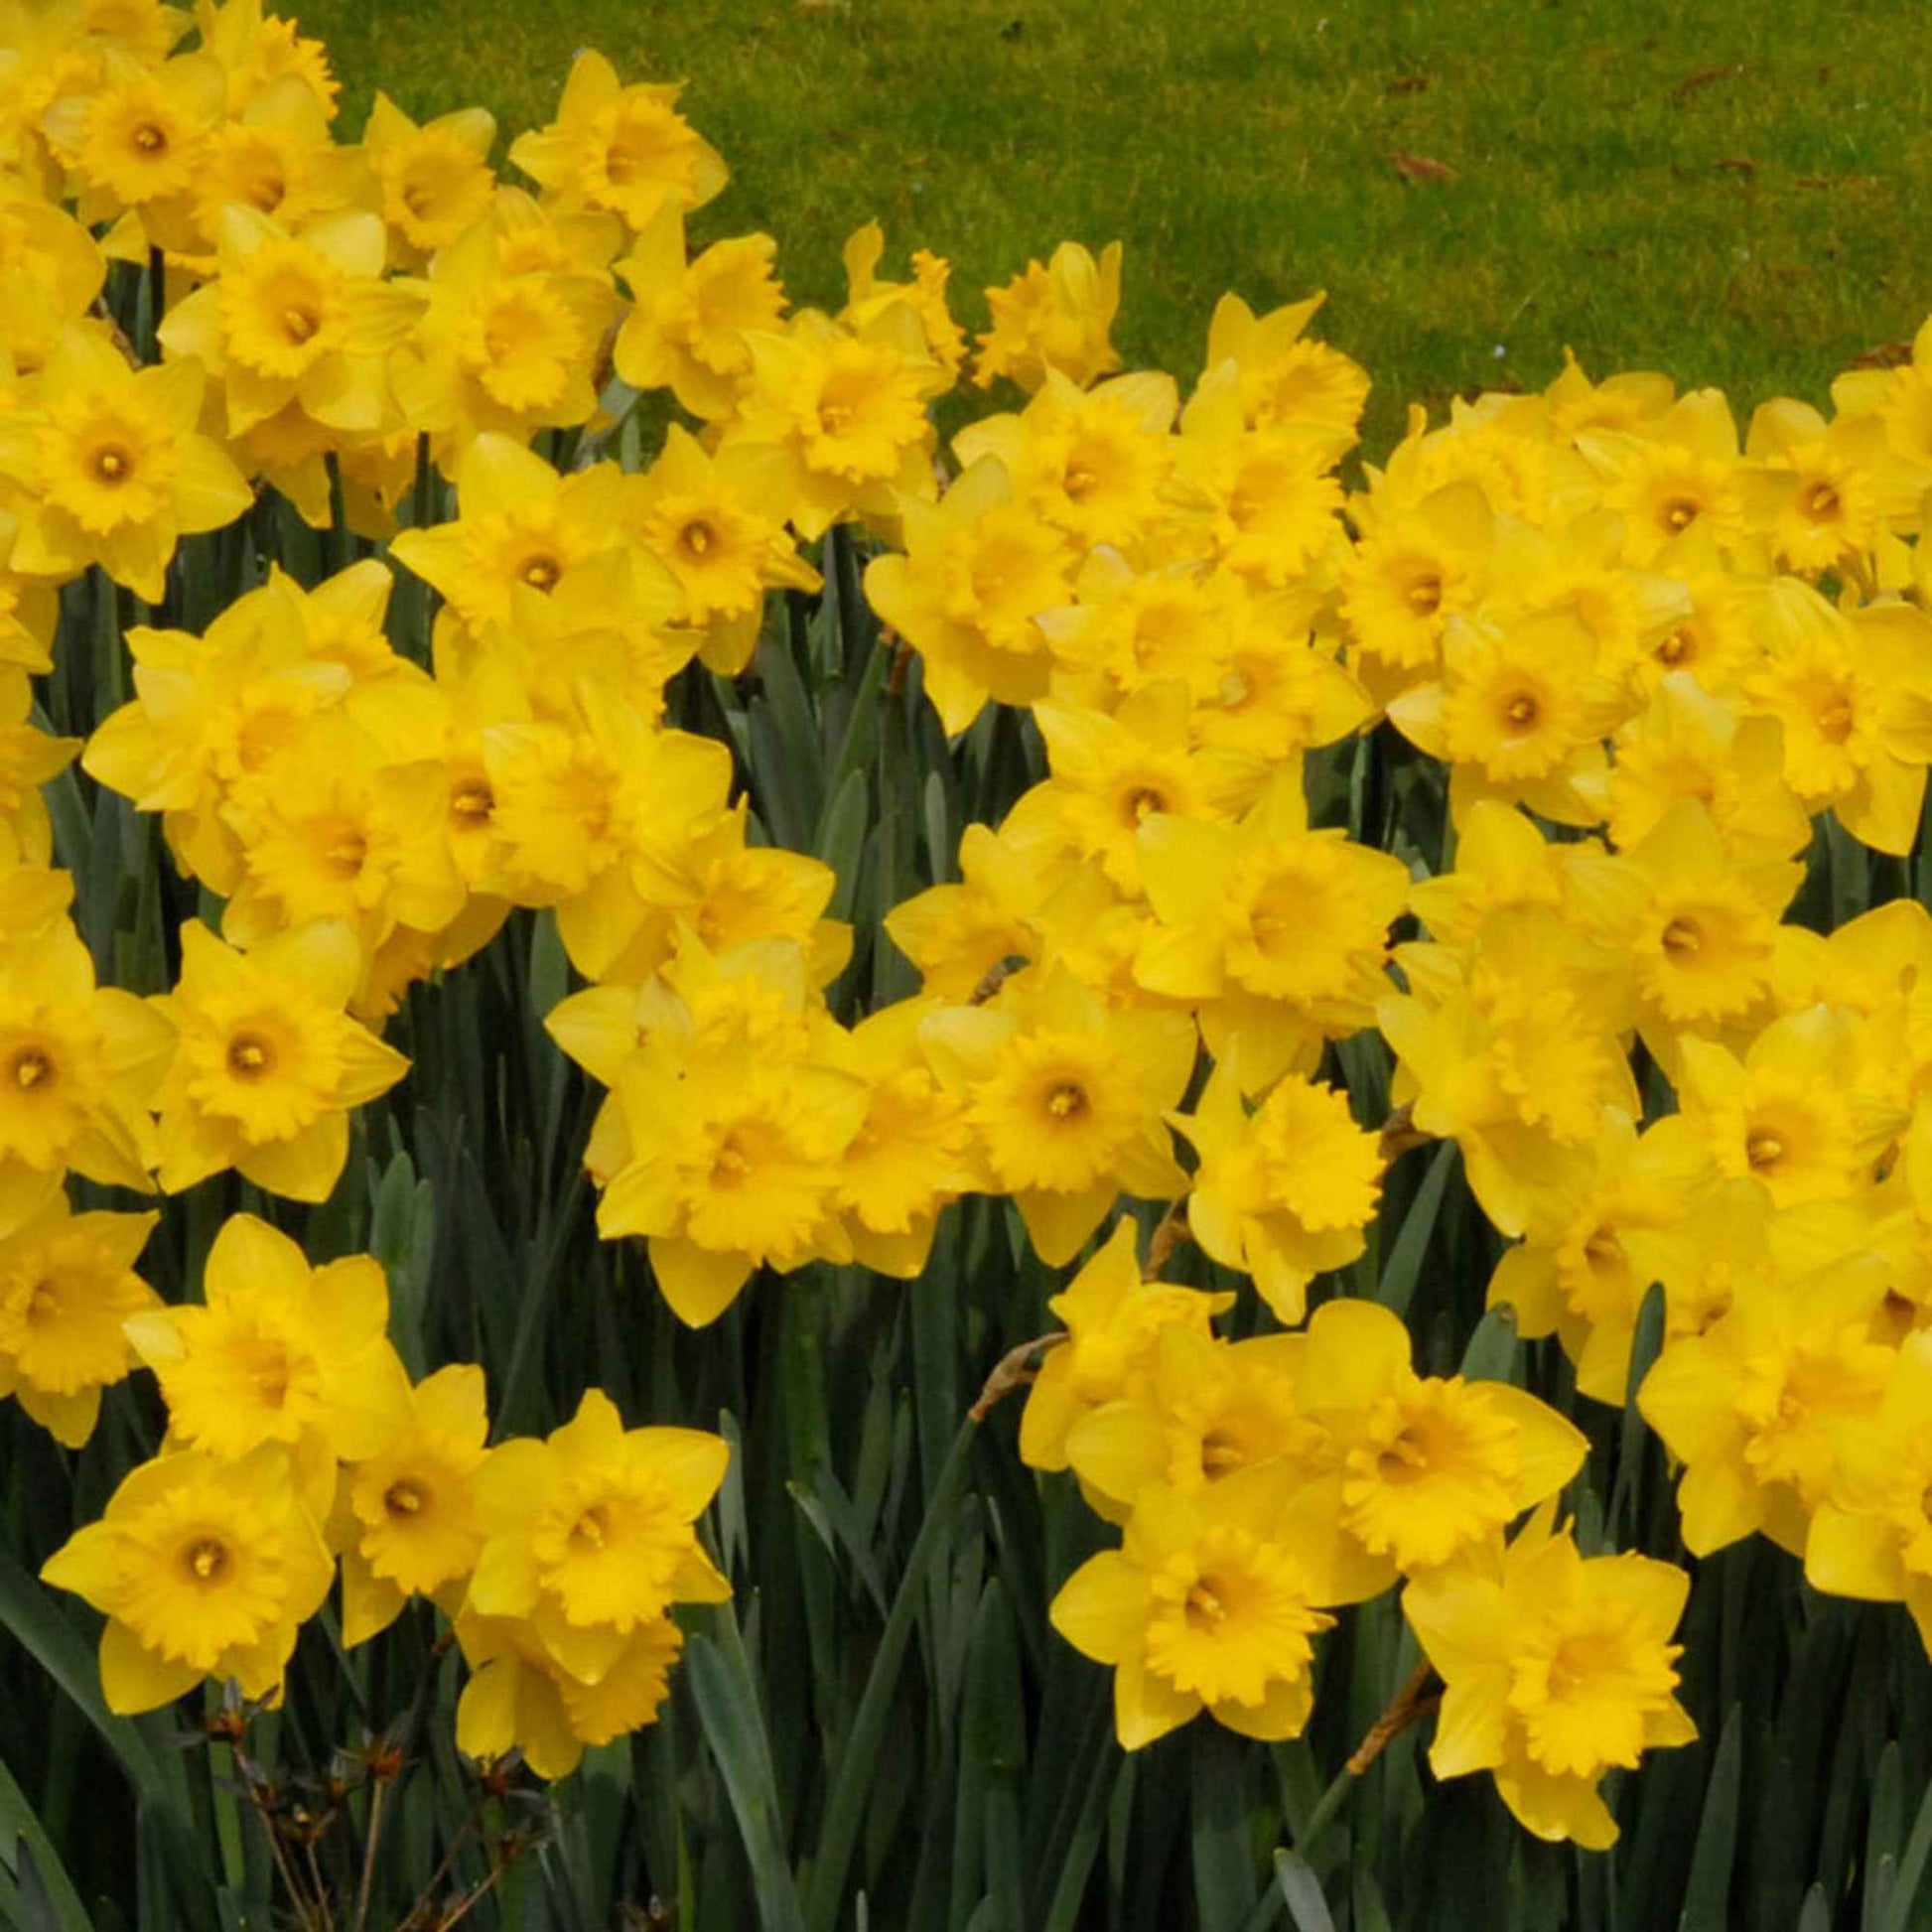 Narcisses Narcissus 'Dutch Master' jaune - Narcisses